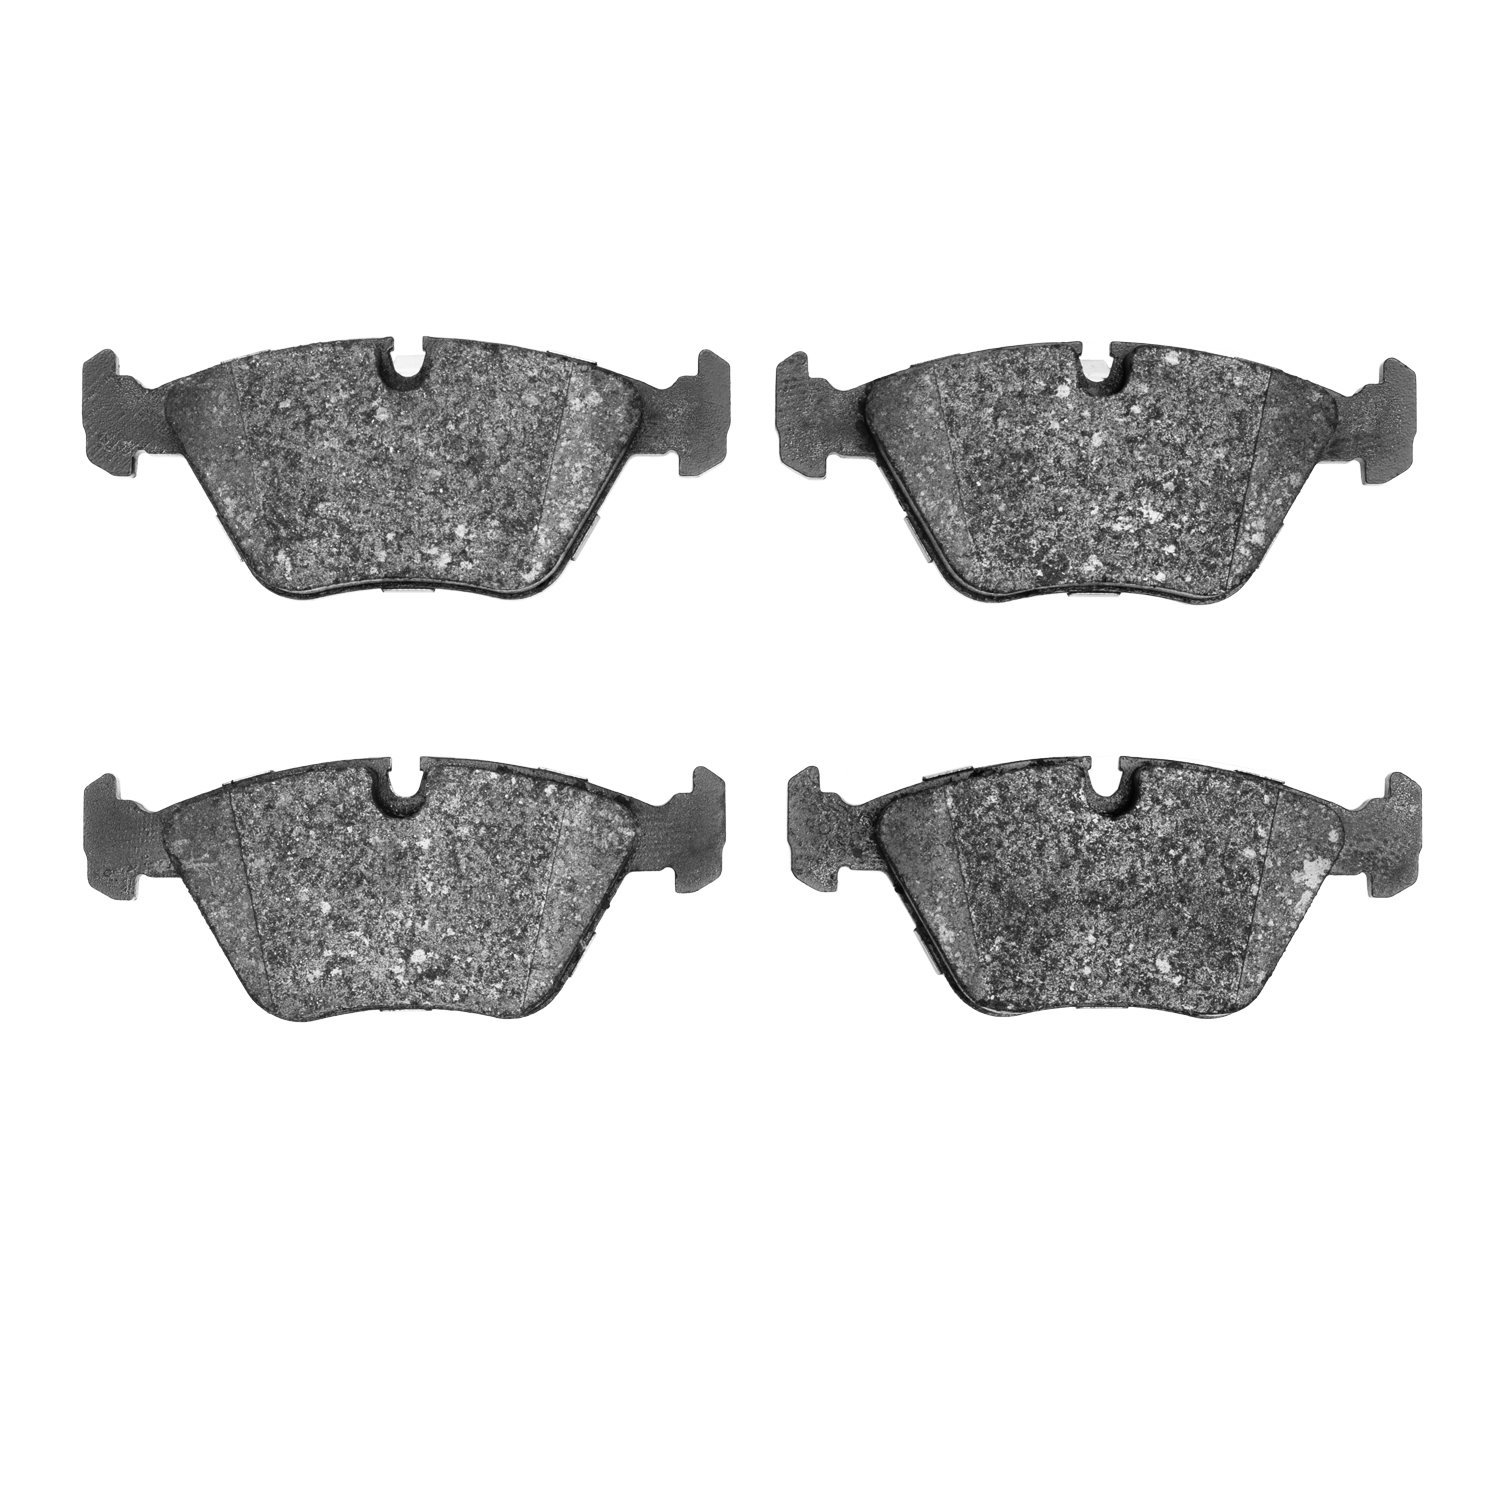 Euro Ceramic Brake Pads, 1987-2005 Fits Multiple Makes/Models, Position: Front